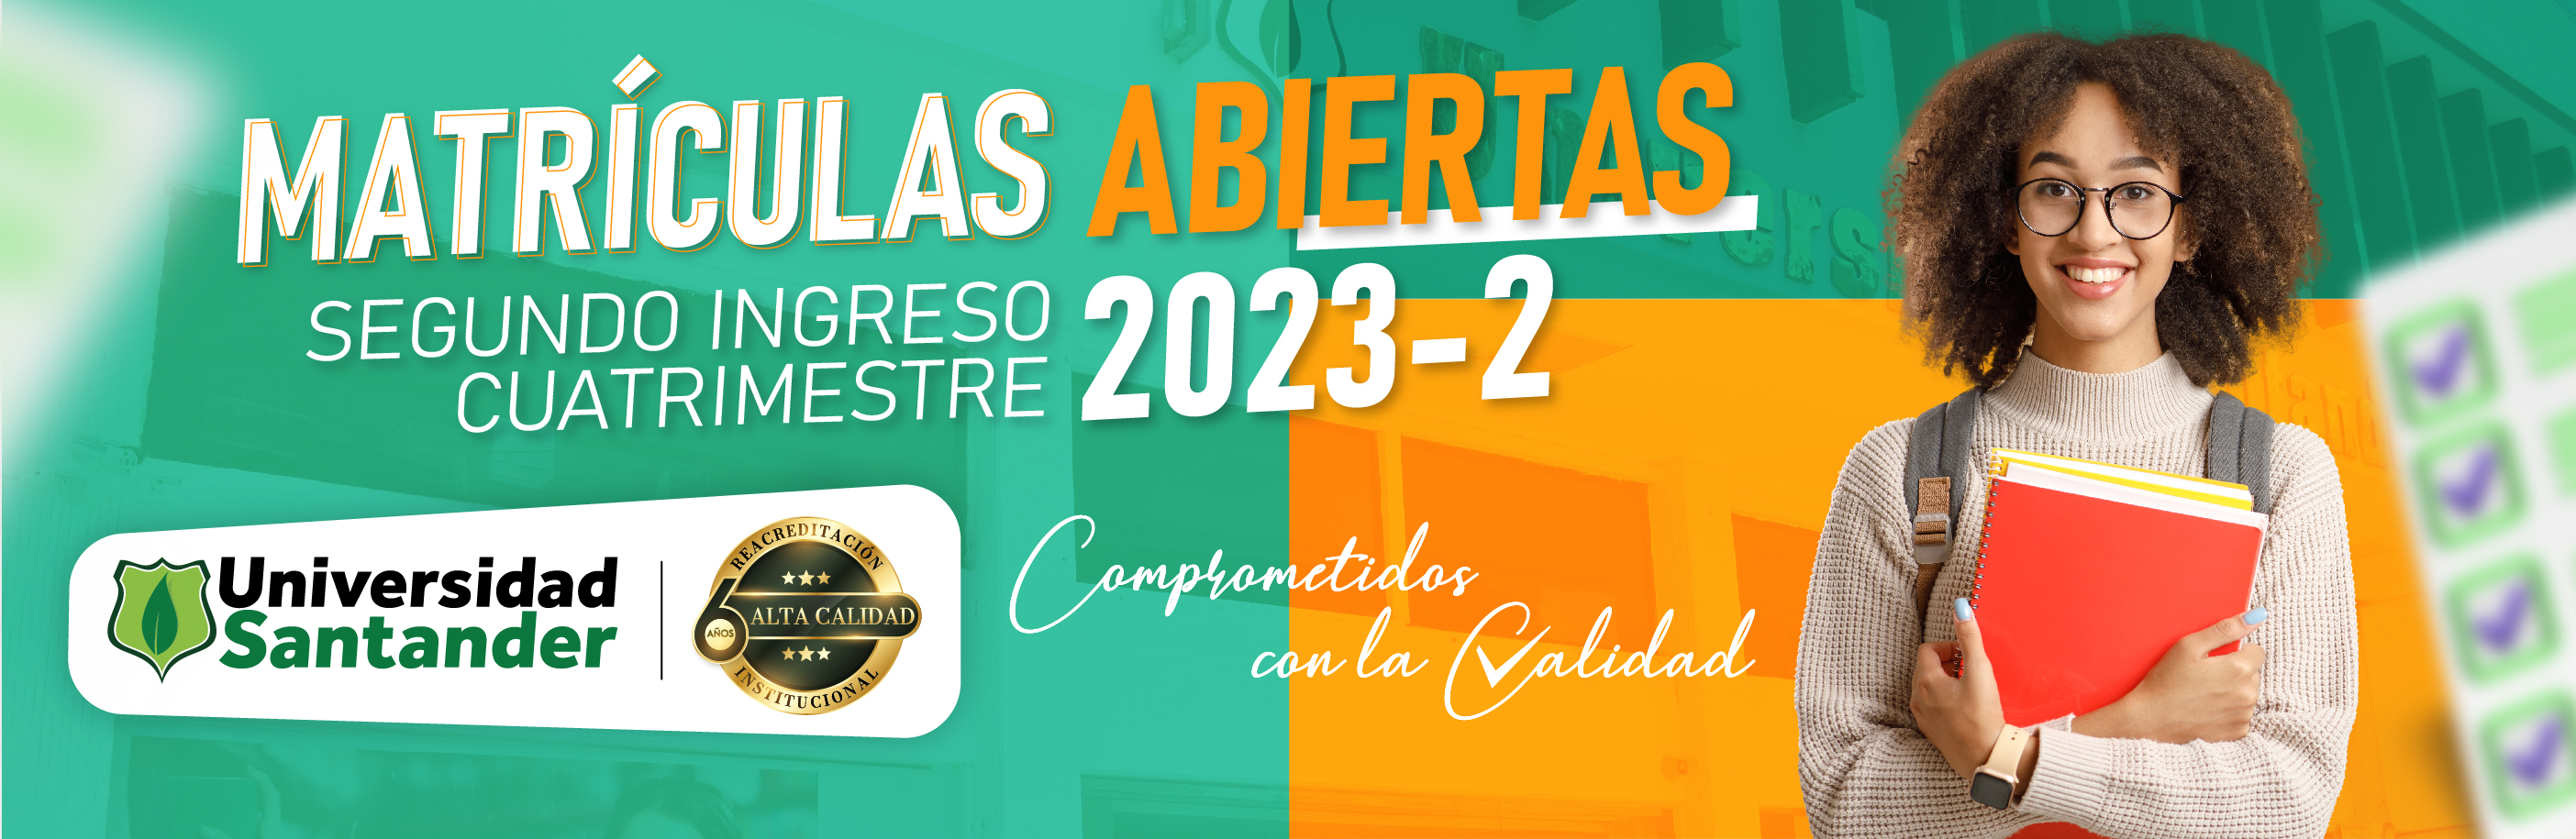 matriculas-abiertas-2023-2-01.jpg